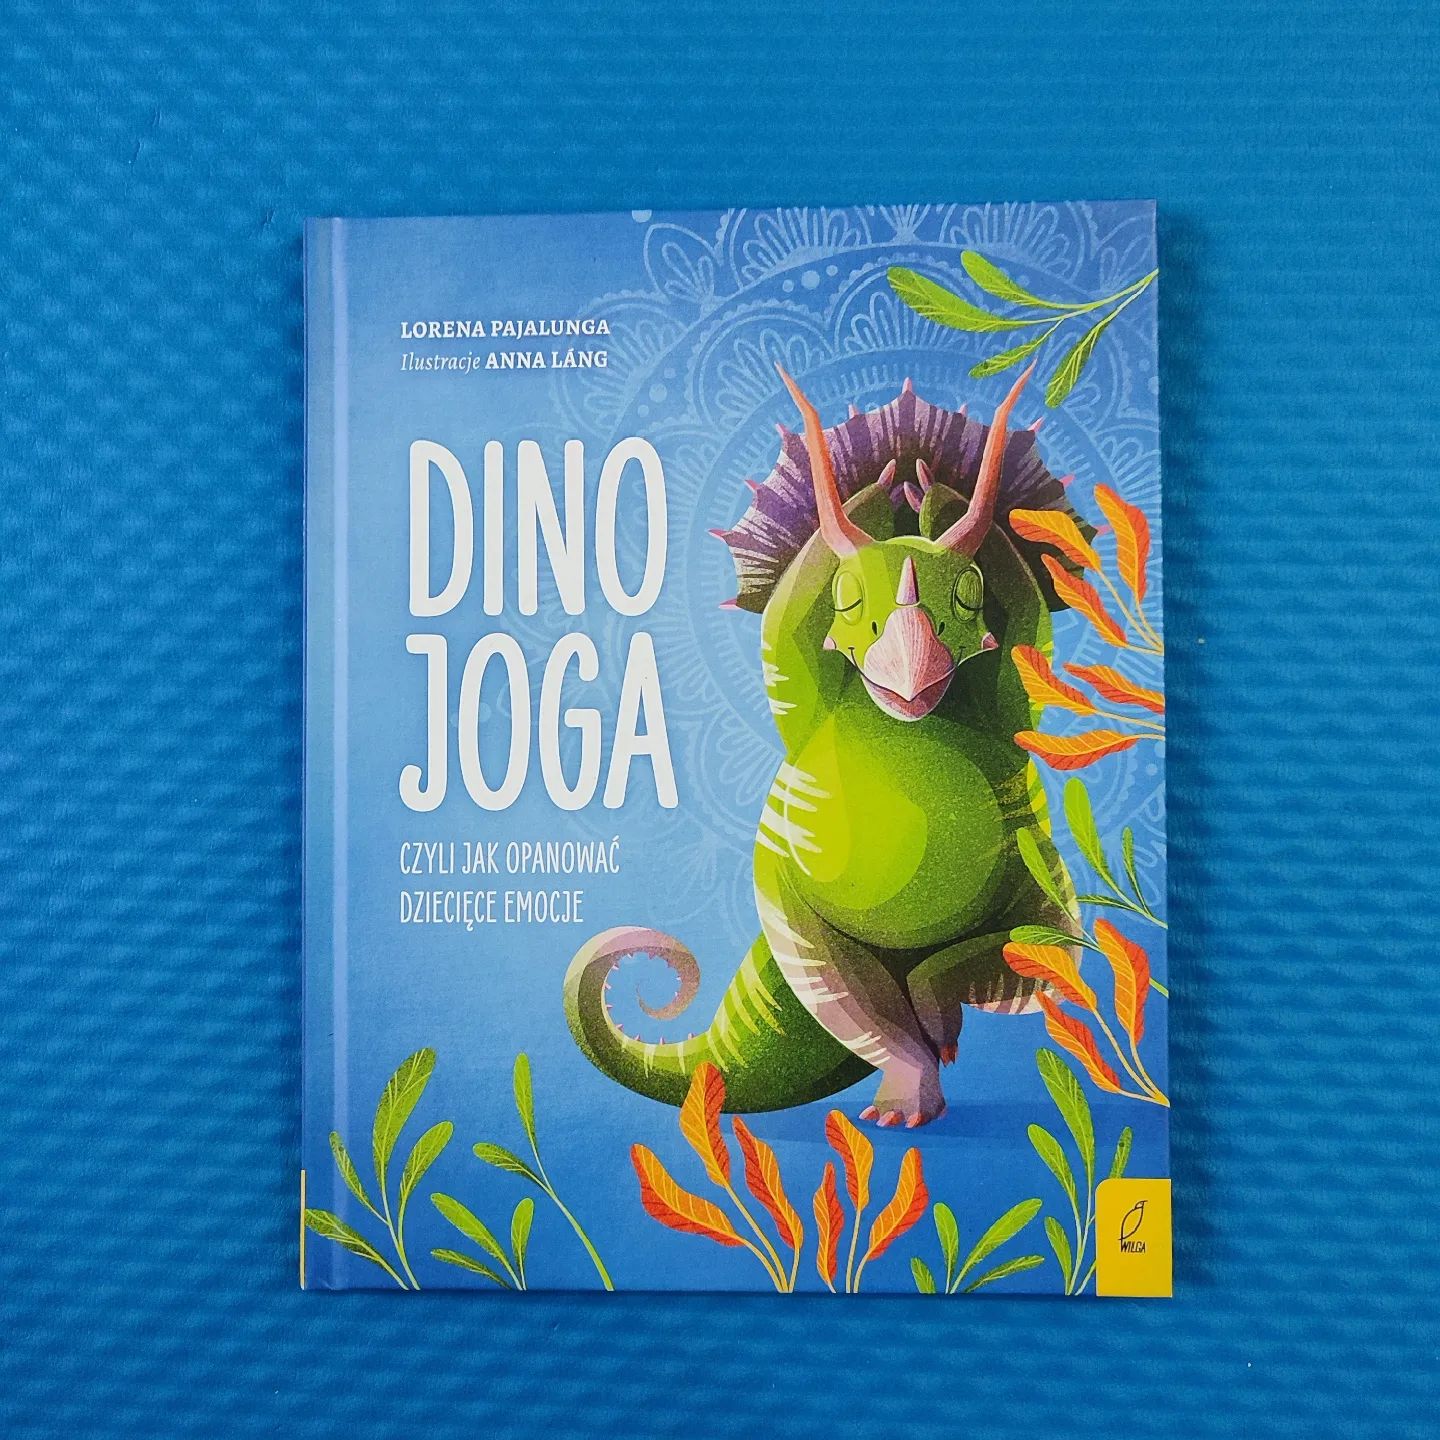 Dino joga – Lorena Pajalunga